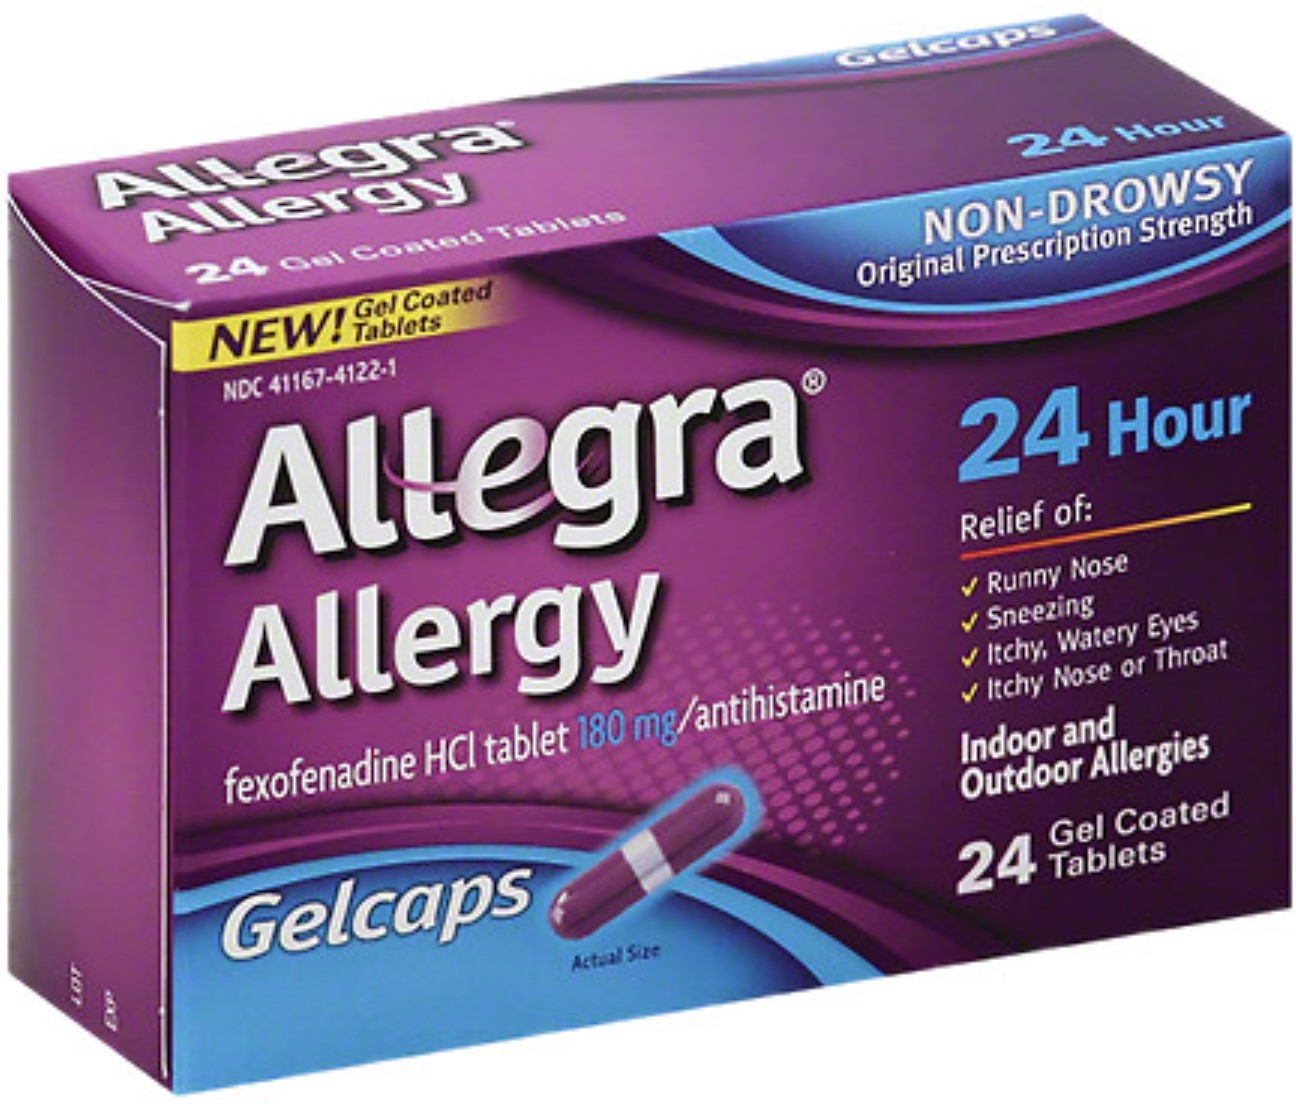 Allegra 24 Hour Allergy, Gelcaps 24 ea (Pack of 2) - image 1 of 2